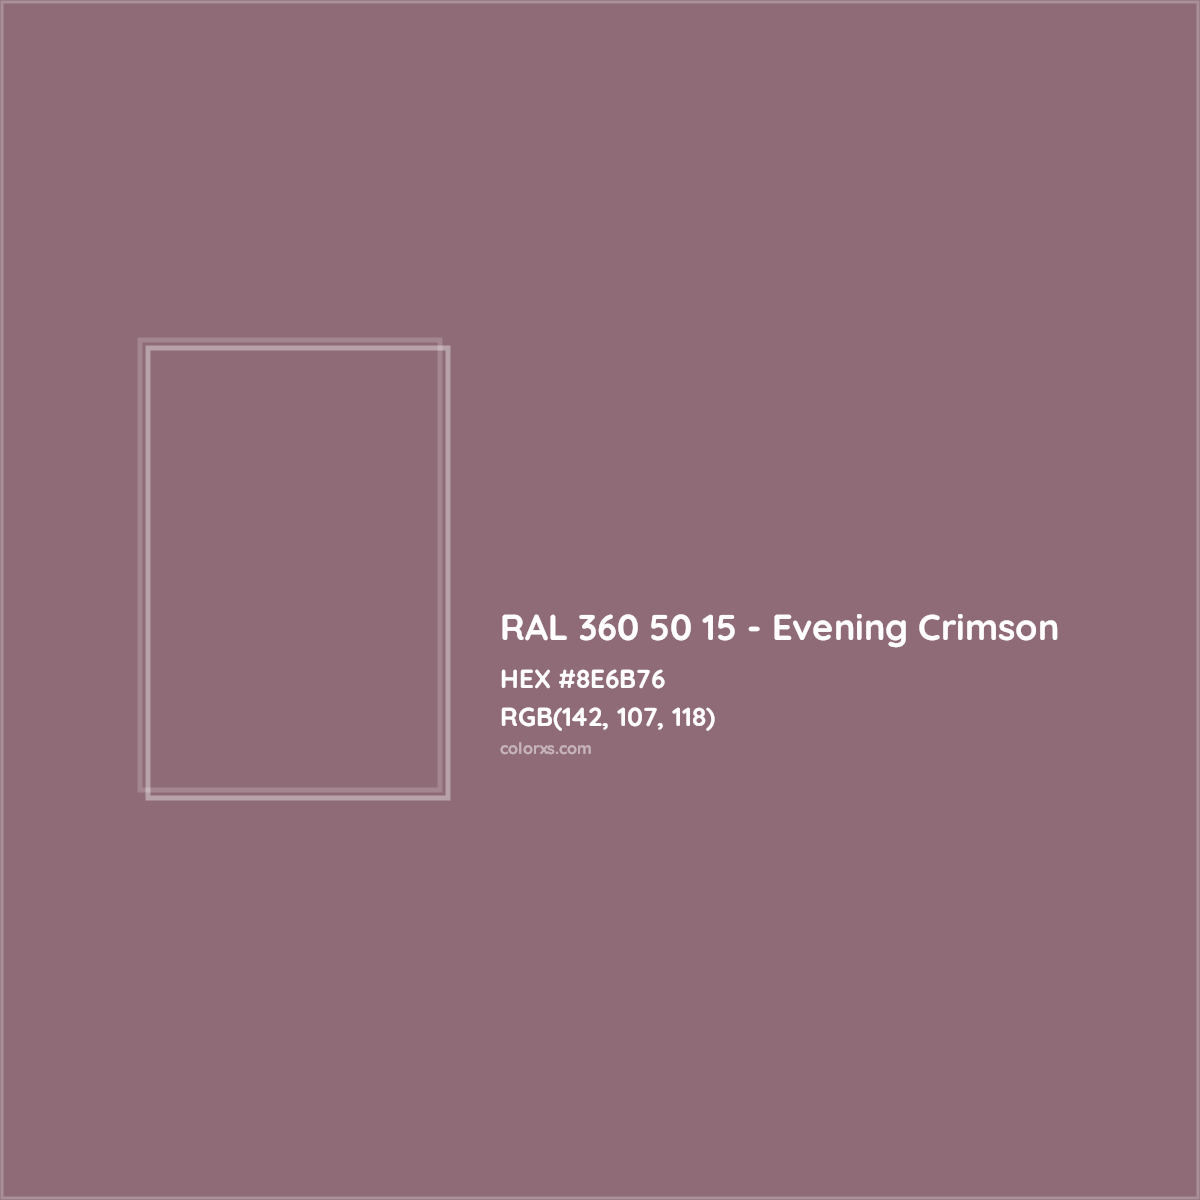 HEX #8E6B76 RAL 360 50 15 - Evening Crimson CMS RAL Design - Color Code